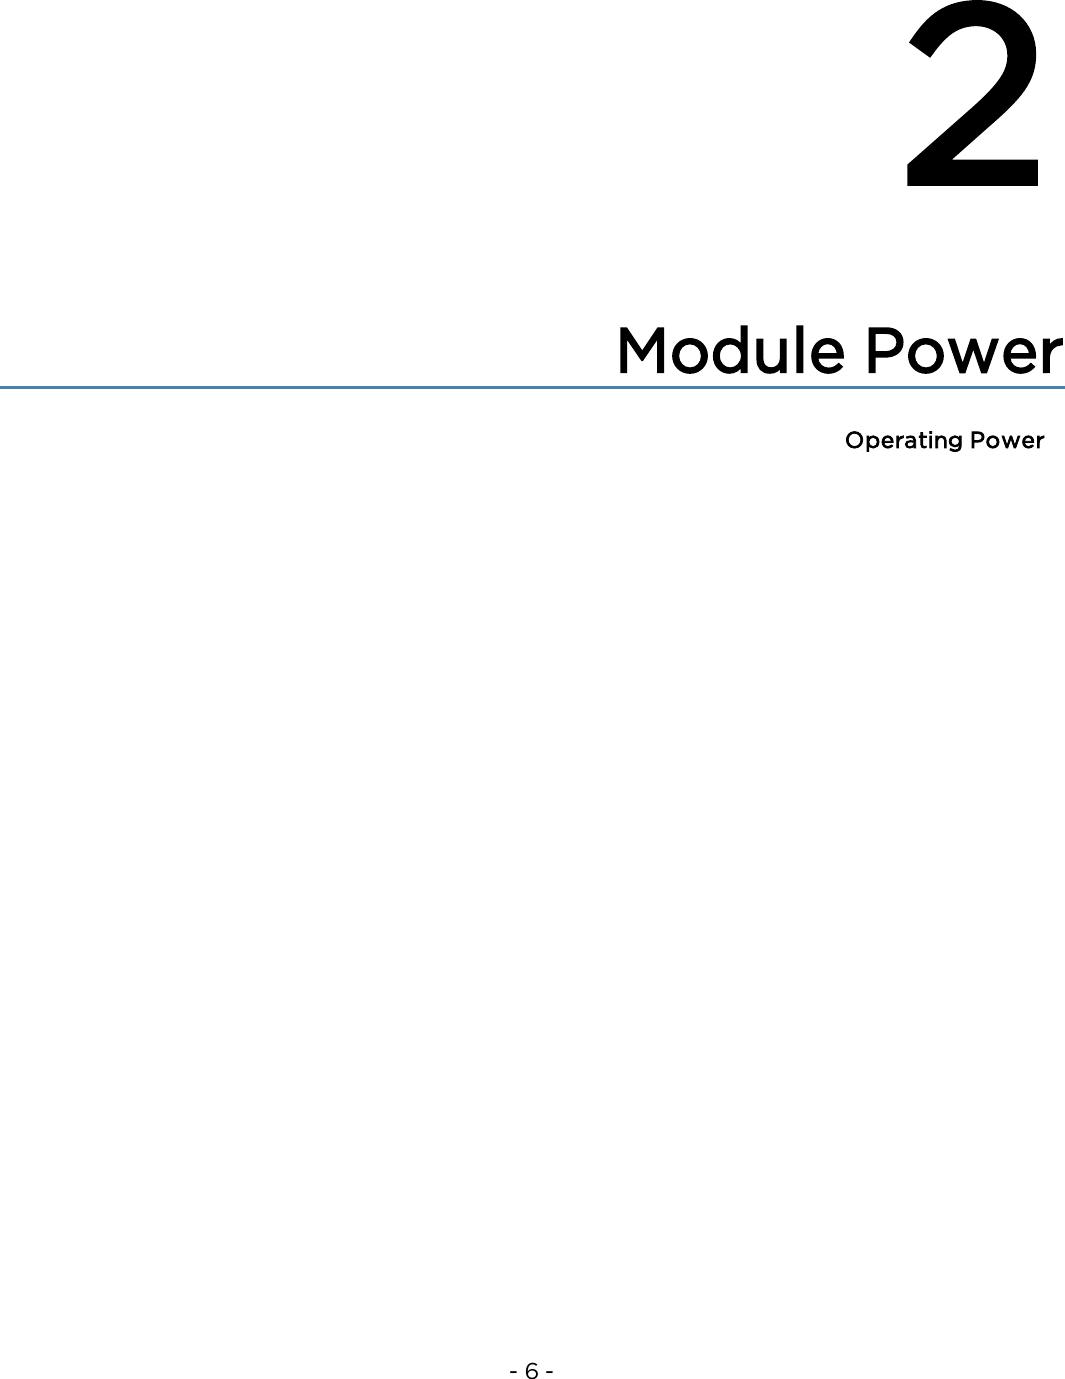 - 6 -2Module PowerOperating Power